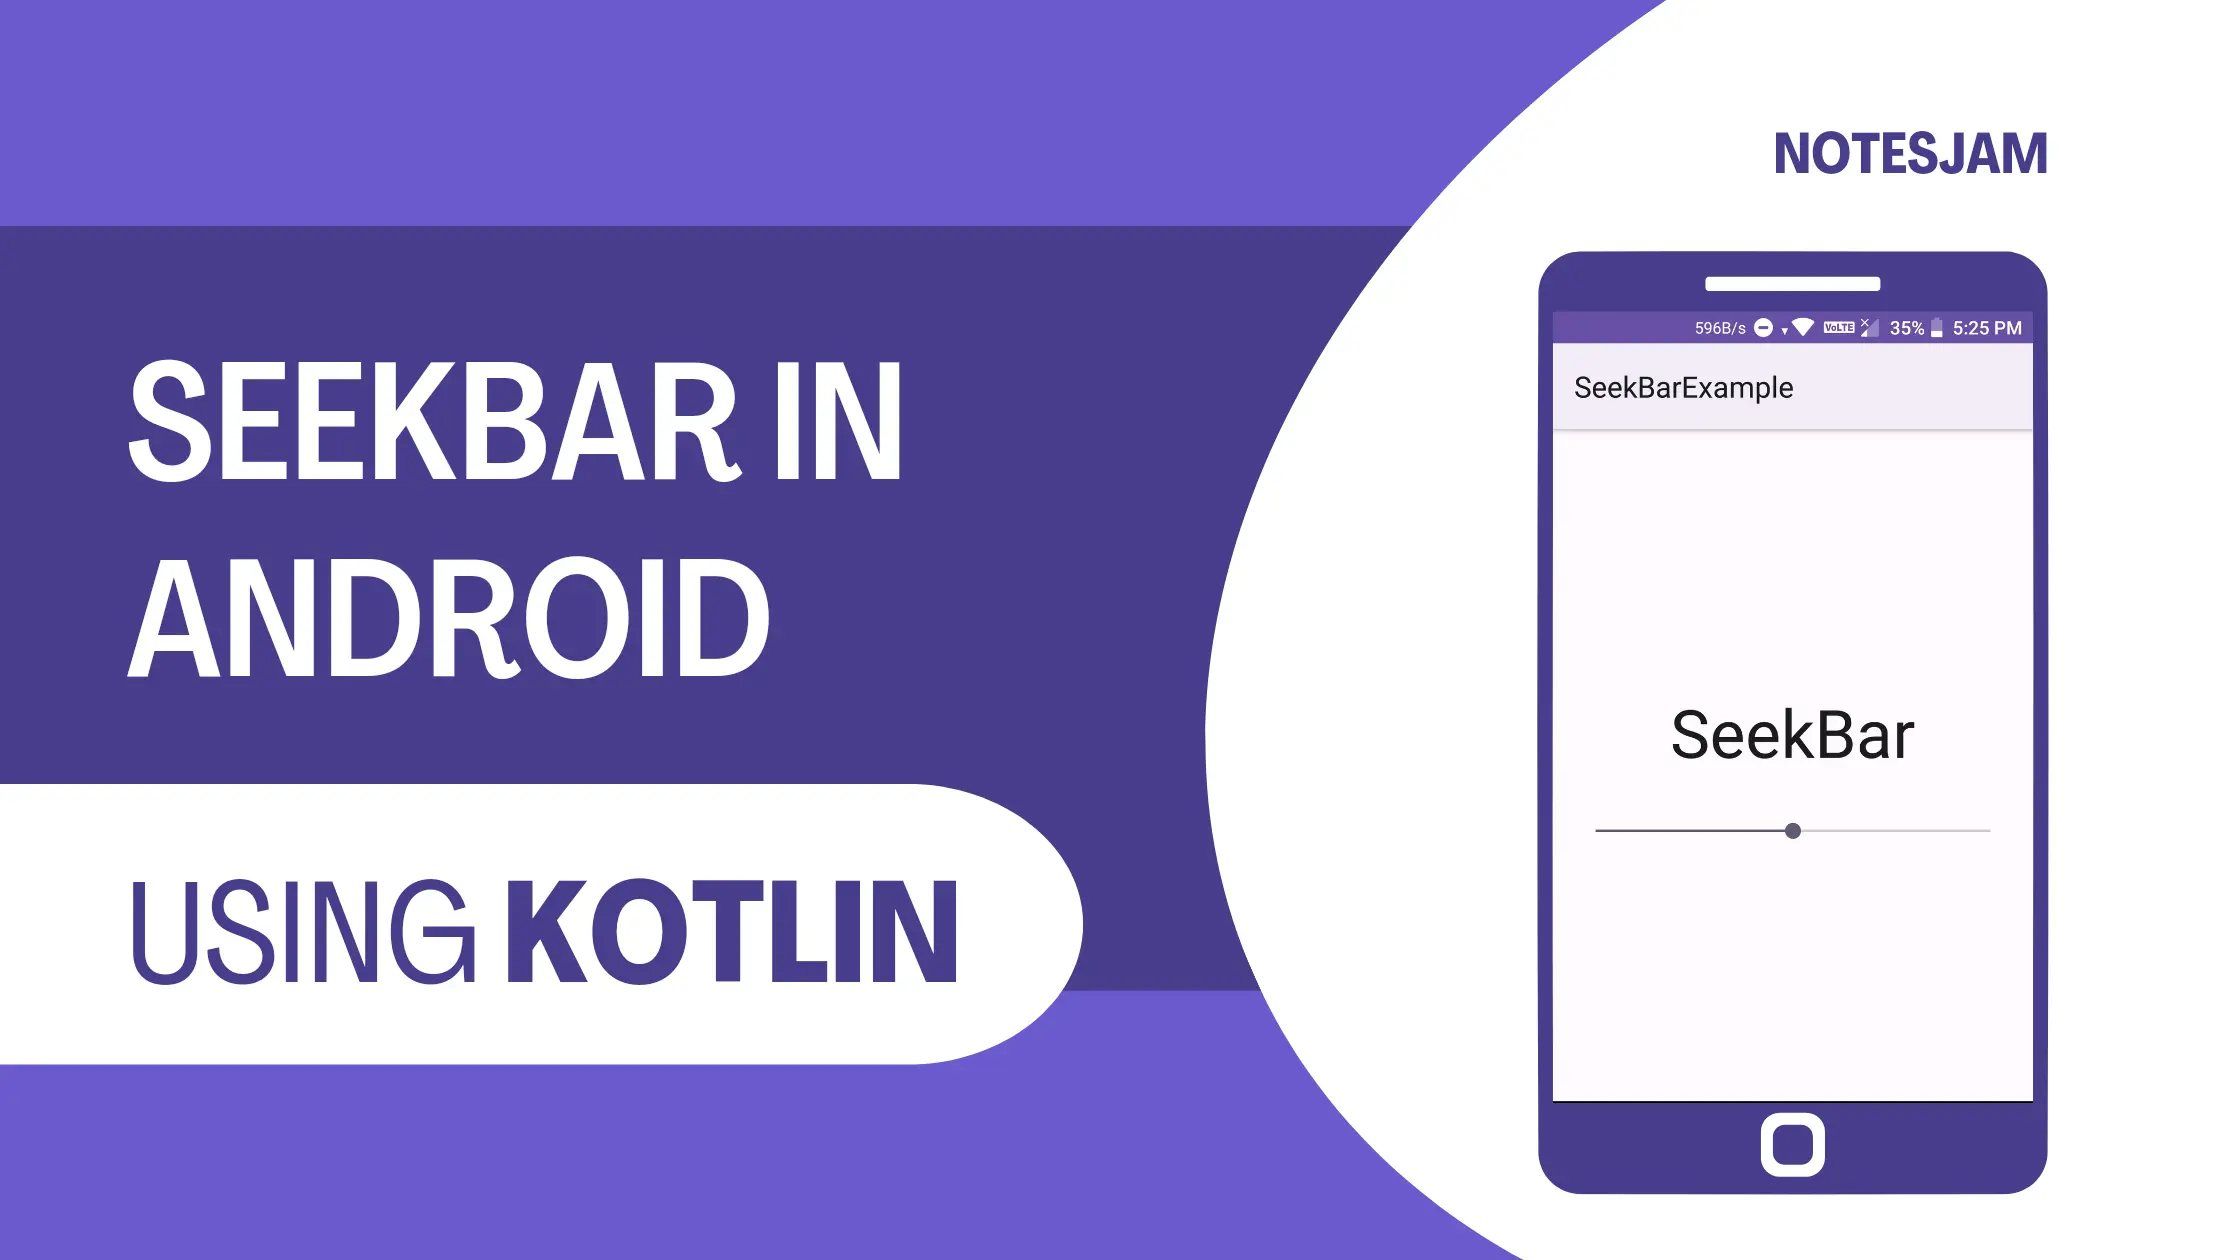 SeekBar in Android Using Kotlin